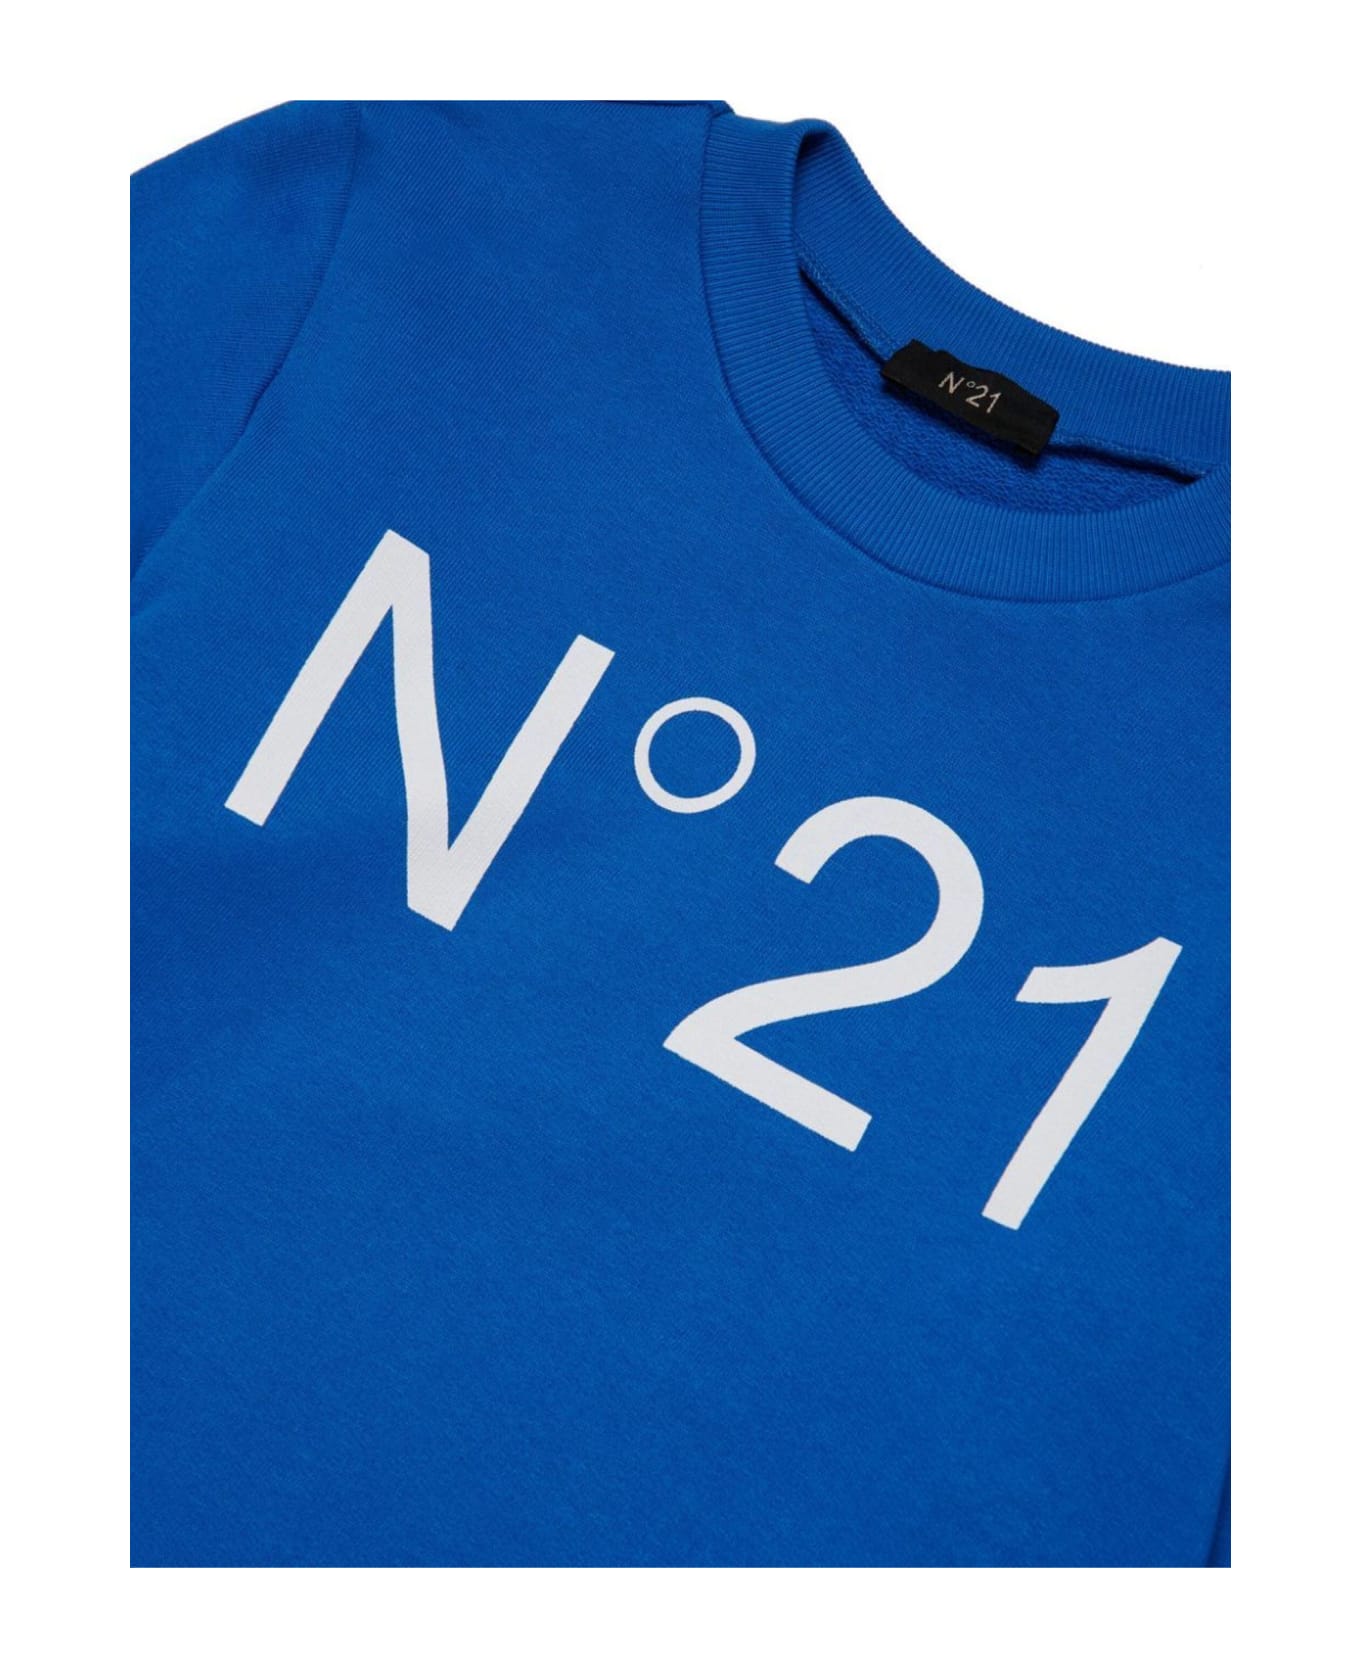 N.21 N°21 Sweaters Blue - Blue